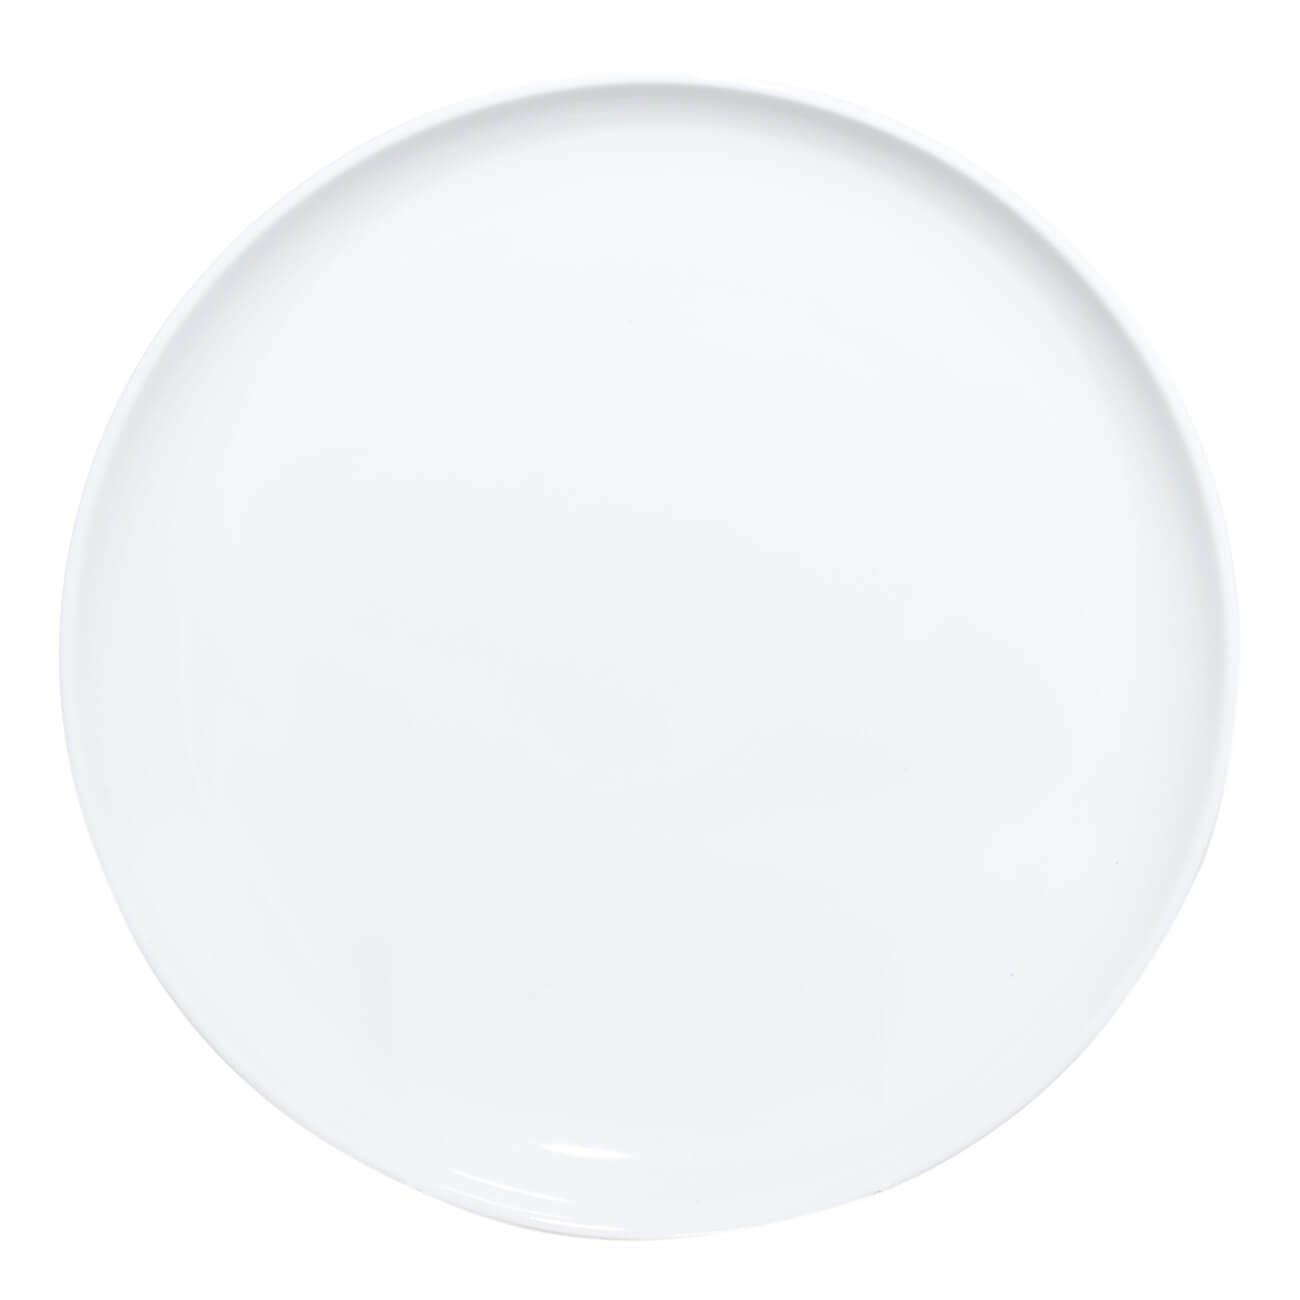 Тарелка обеденная, 25 см, фарфор P, белая, Silence тарелка обеденная 27 см фарфор n белая dreams scroll white